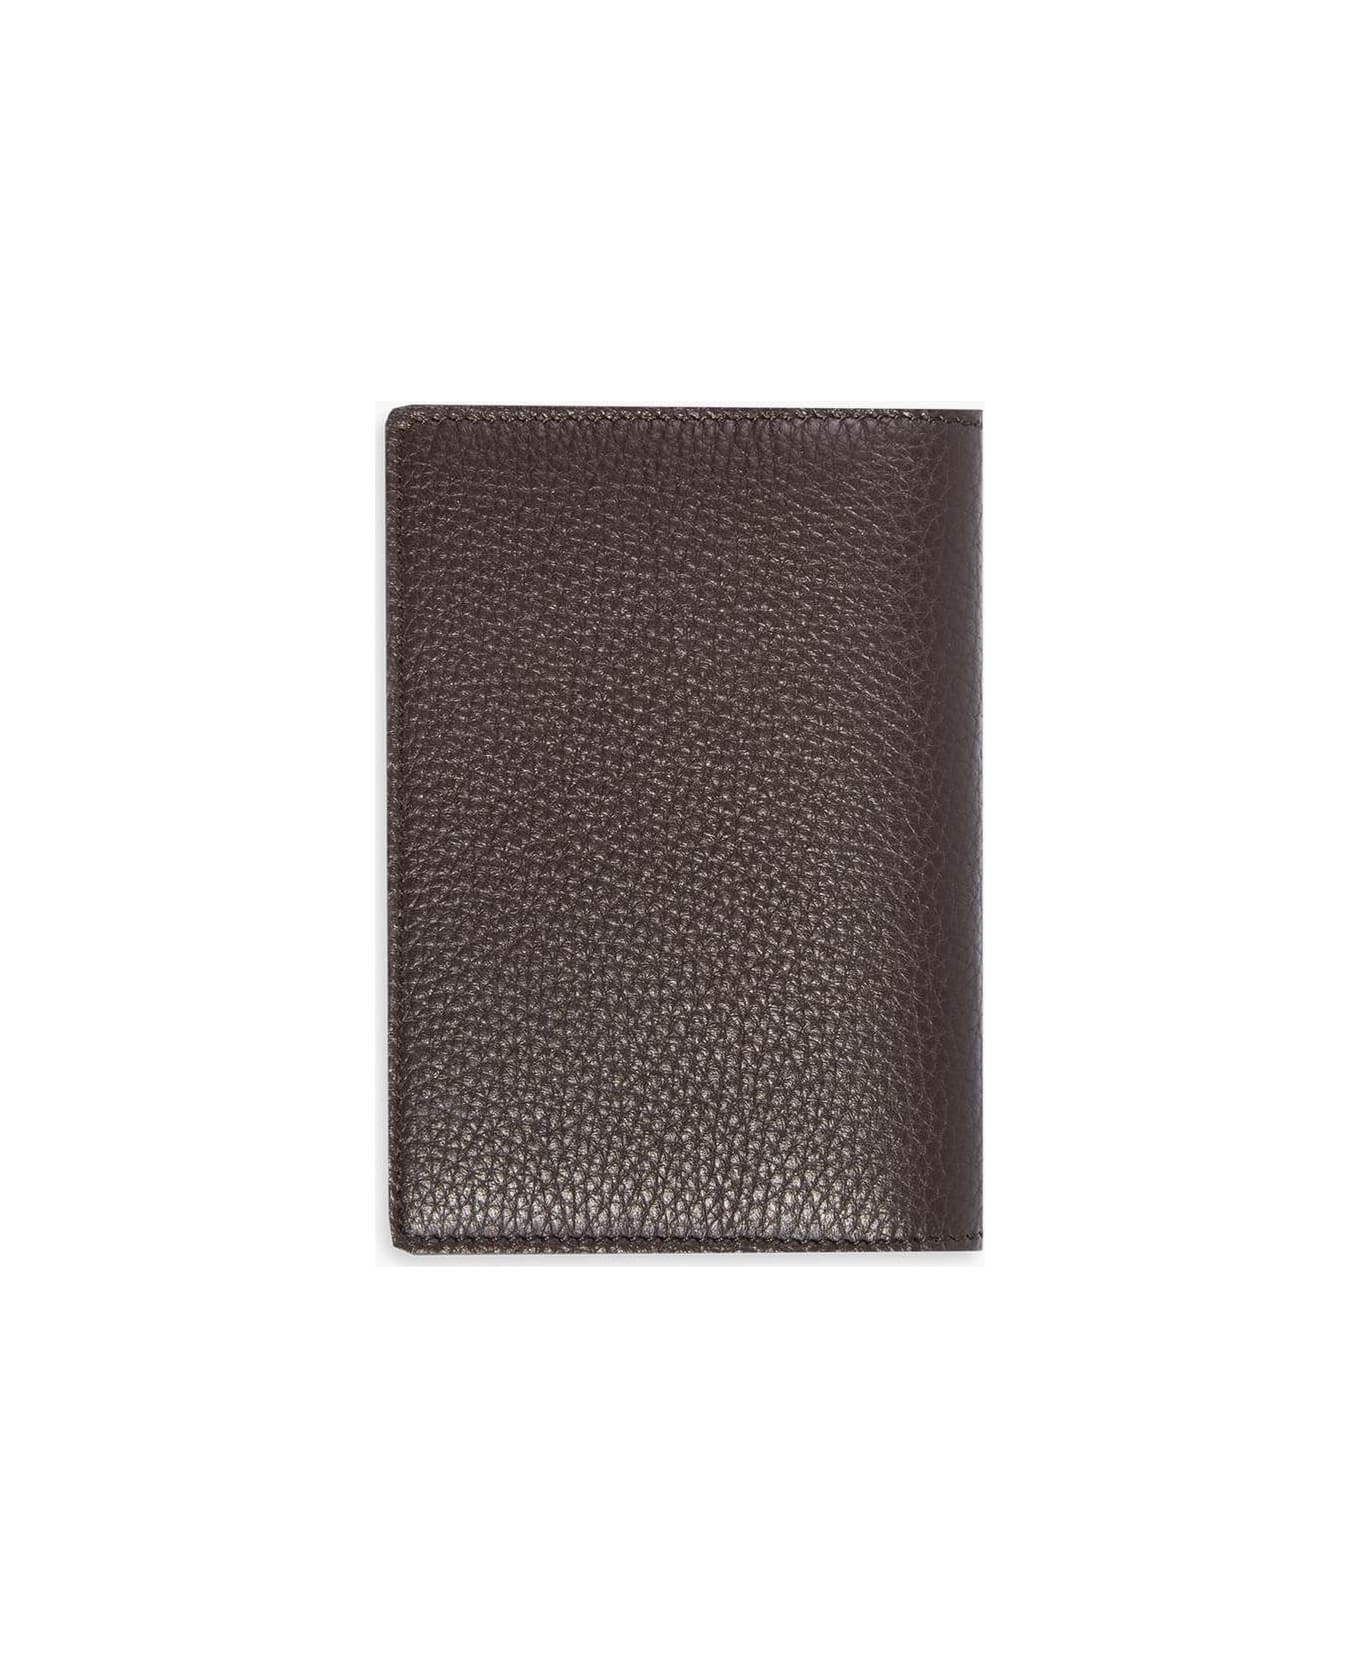 Larusmiani Passport Cover 'fiumicino' Wallet - Chocolate 財布